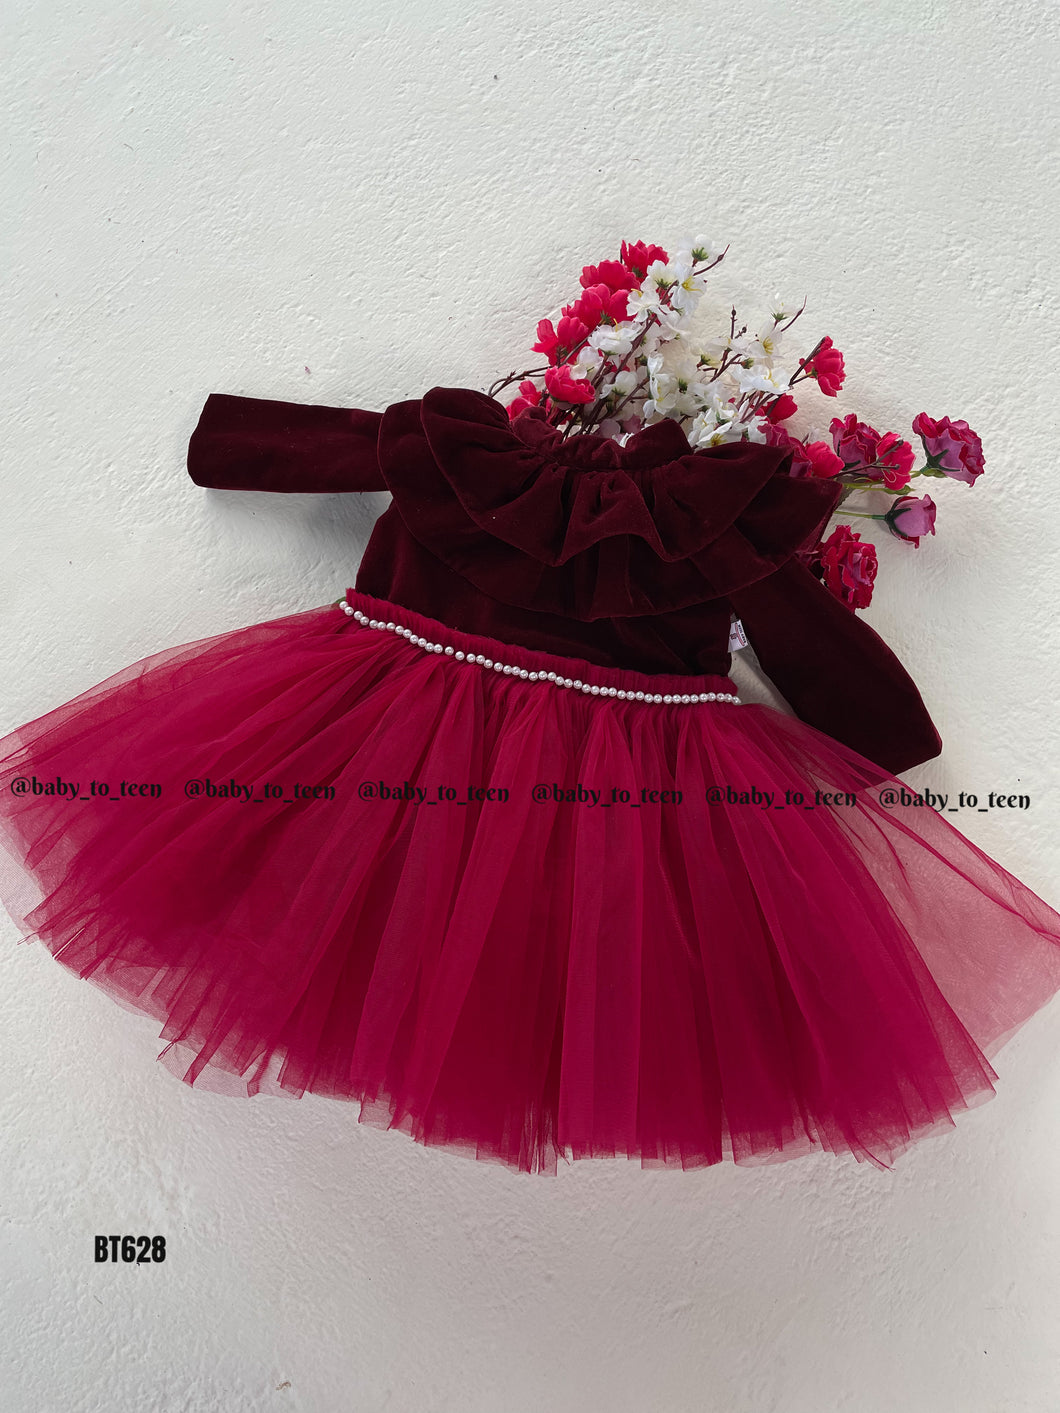 BT628 Crimson Blossom Festive Frock – Let Her Moments Bloom